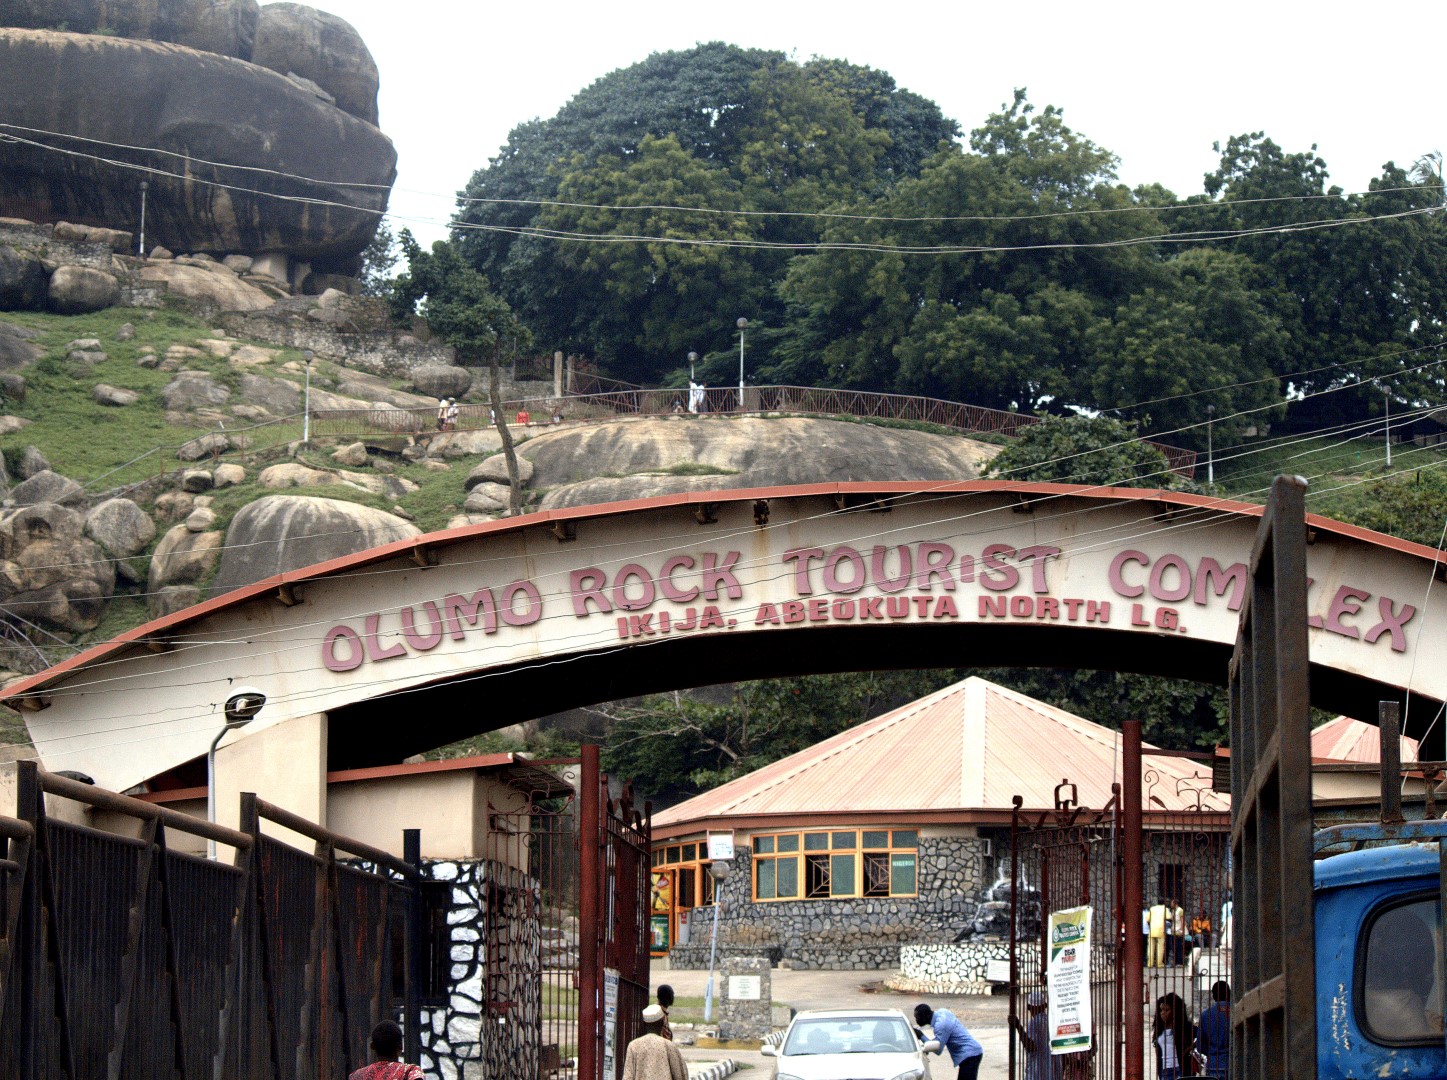 The olumo rock tourist complex entrance gate